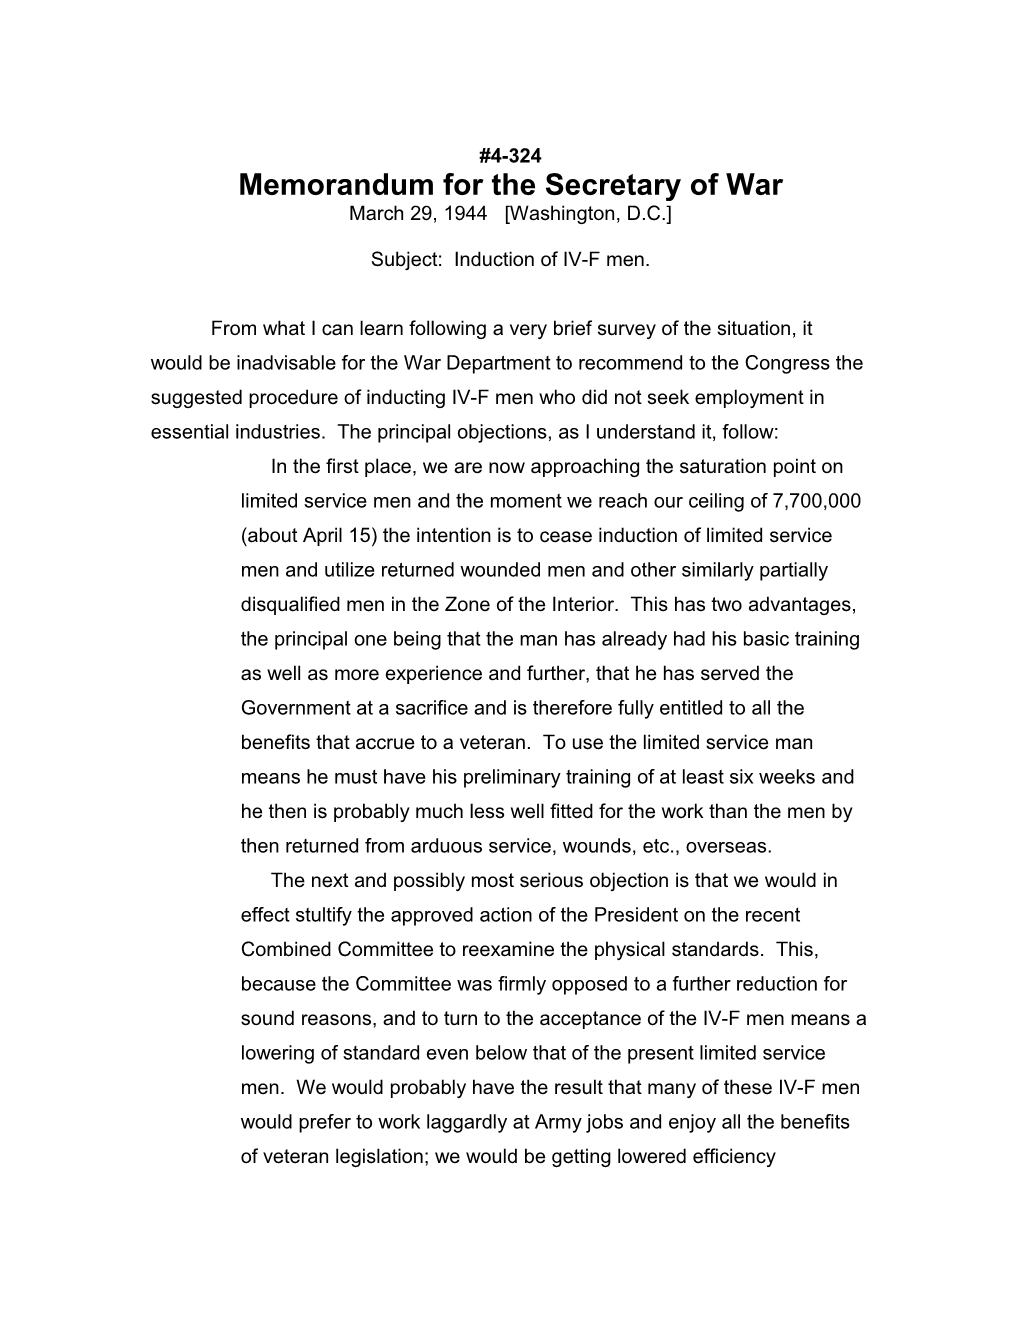 Memorandum for the Secretary of War